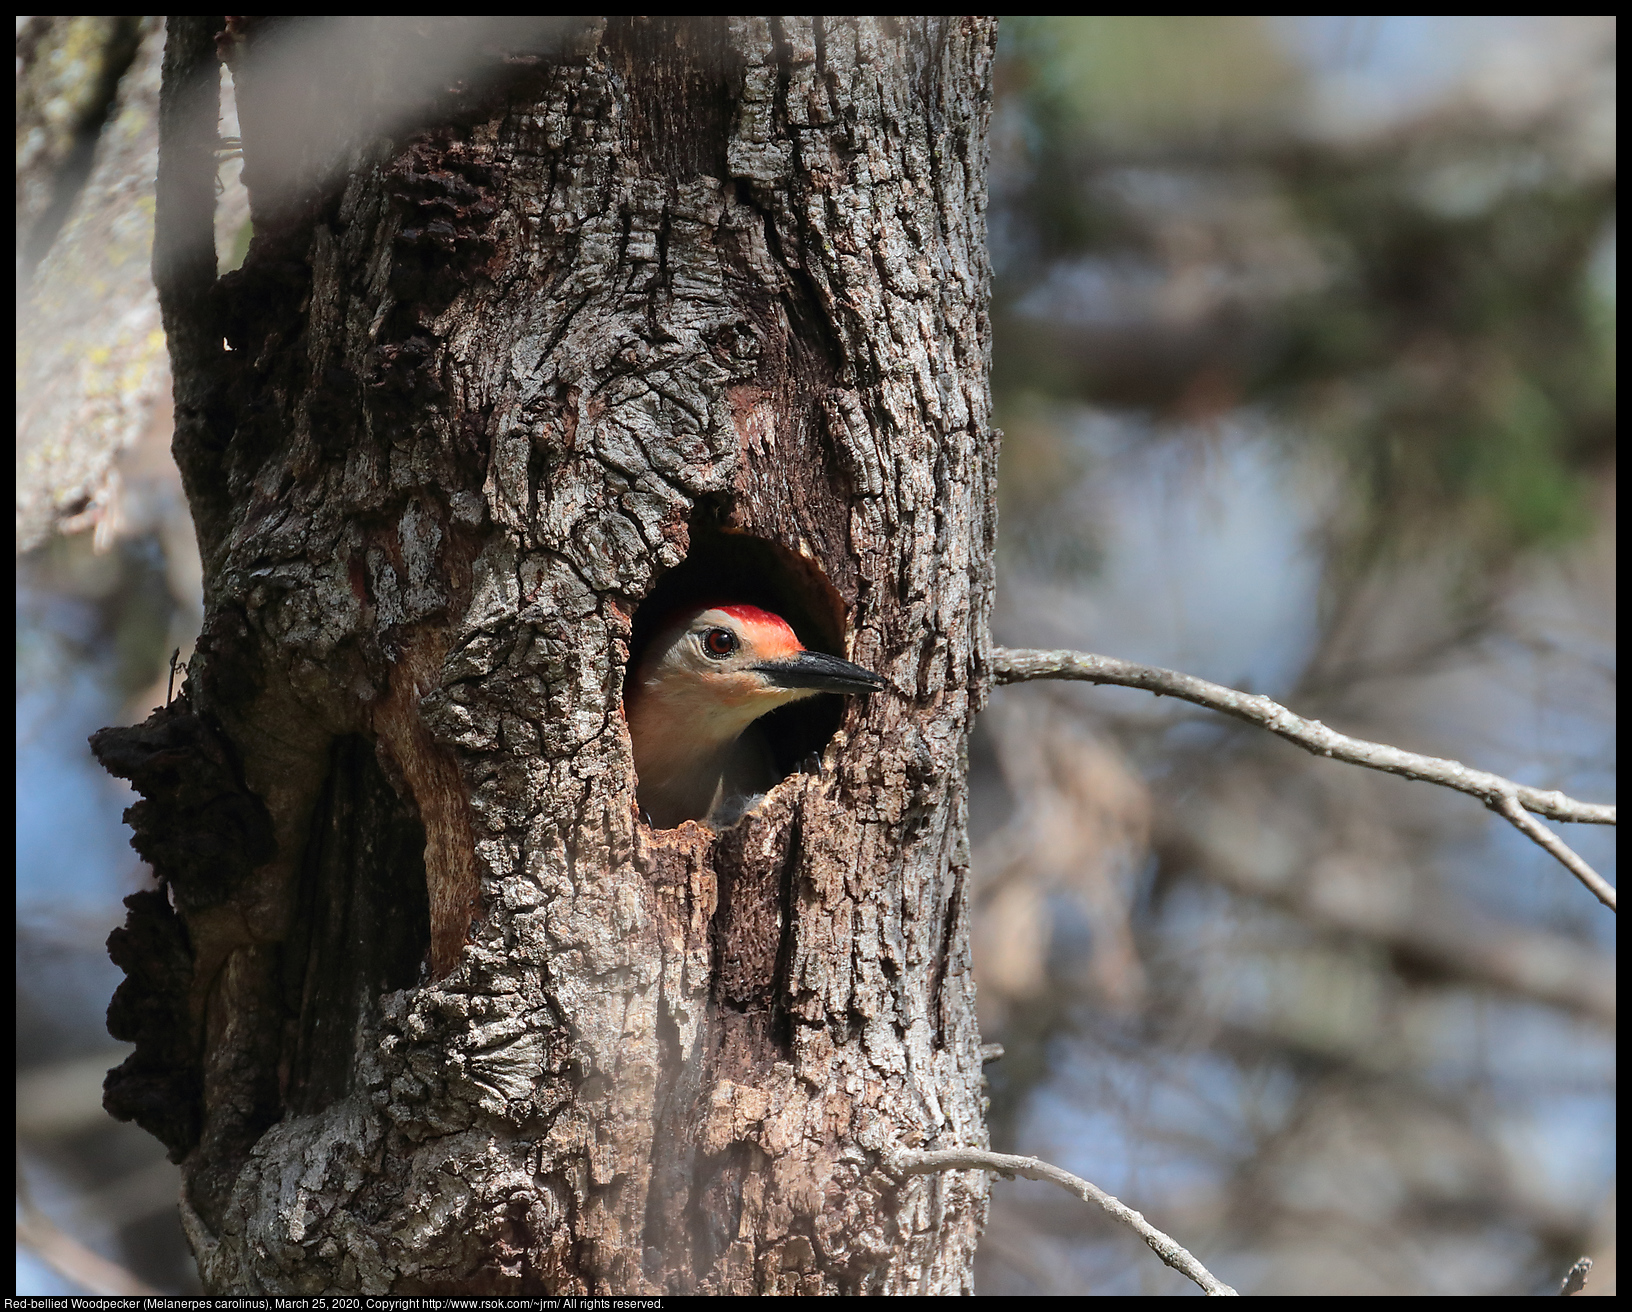 Red-bellied Woodpecker (Melanerpes carolinus), March 25, 2020